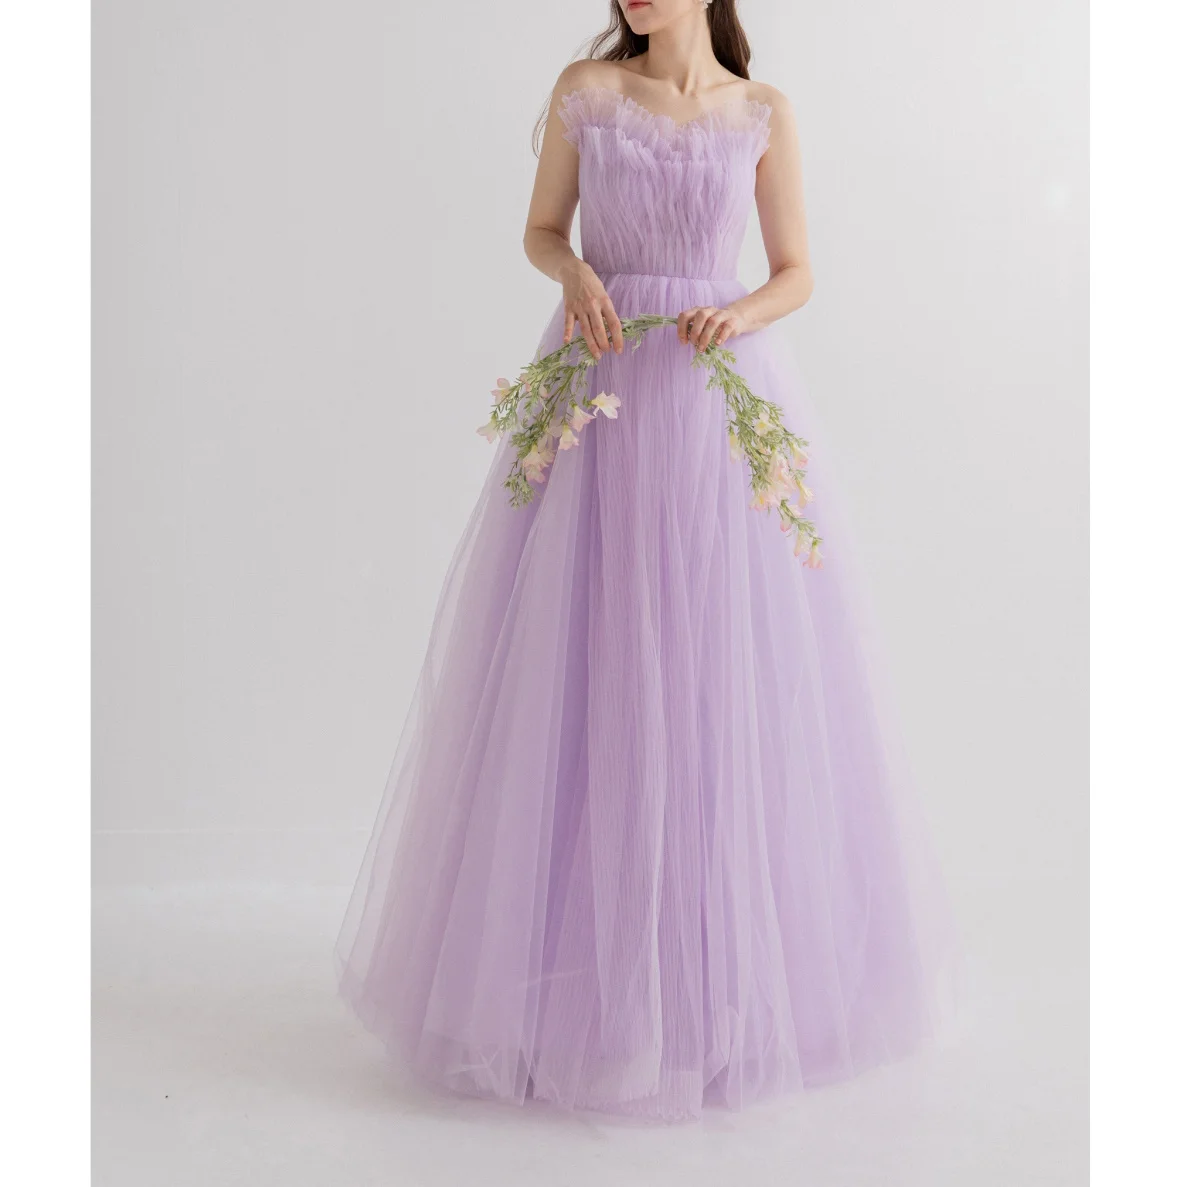 

Welove Fairy Tulle Lavender A Line Korea Evening Dresses Wedding Photo shoot Strapless Floor Length Prom Gowns Bride Dress